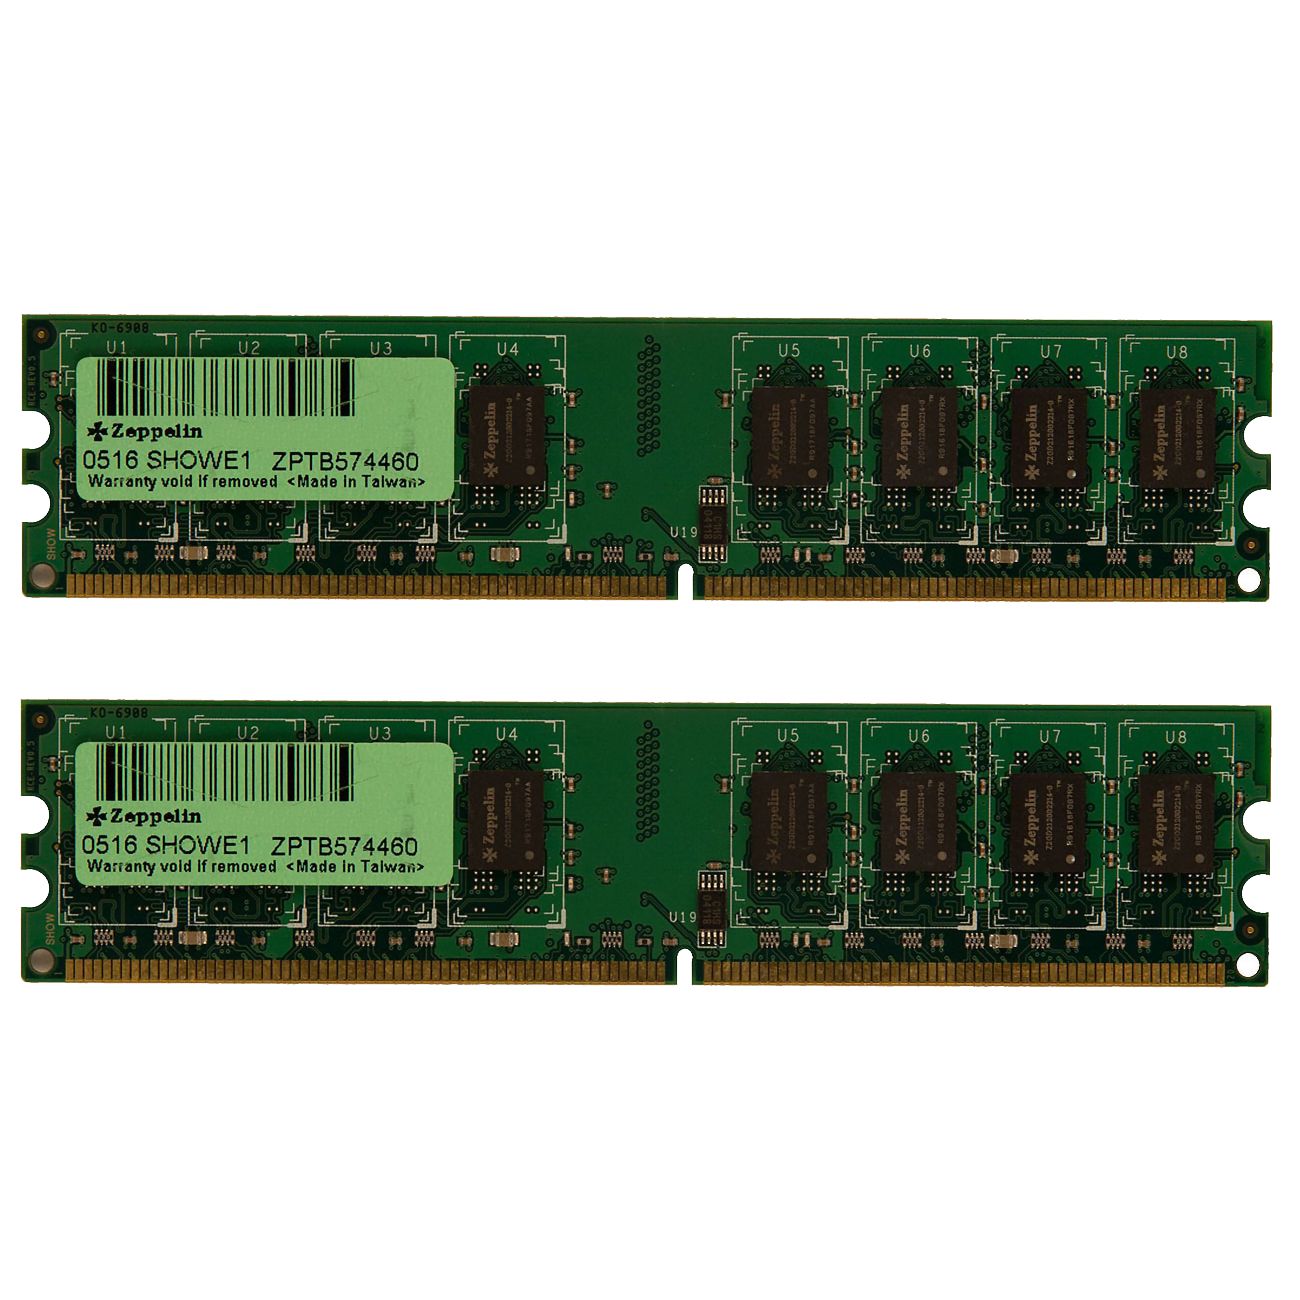 Memorii ZEPPELIN DDR2 4 GB, frecventa 800 MHz, 2 GB x 2 module, 